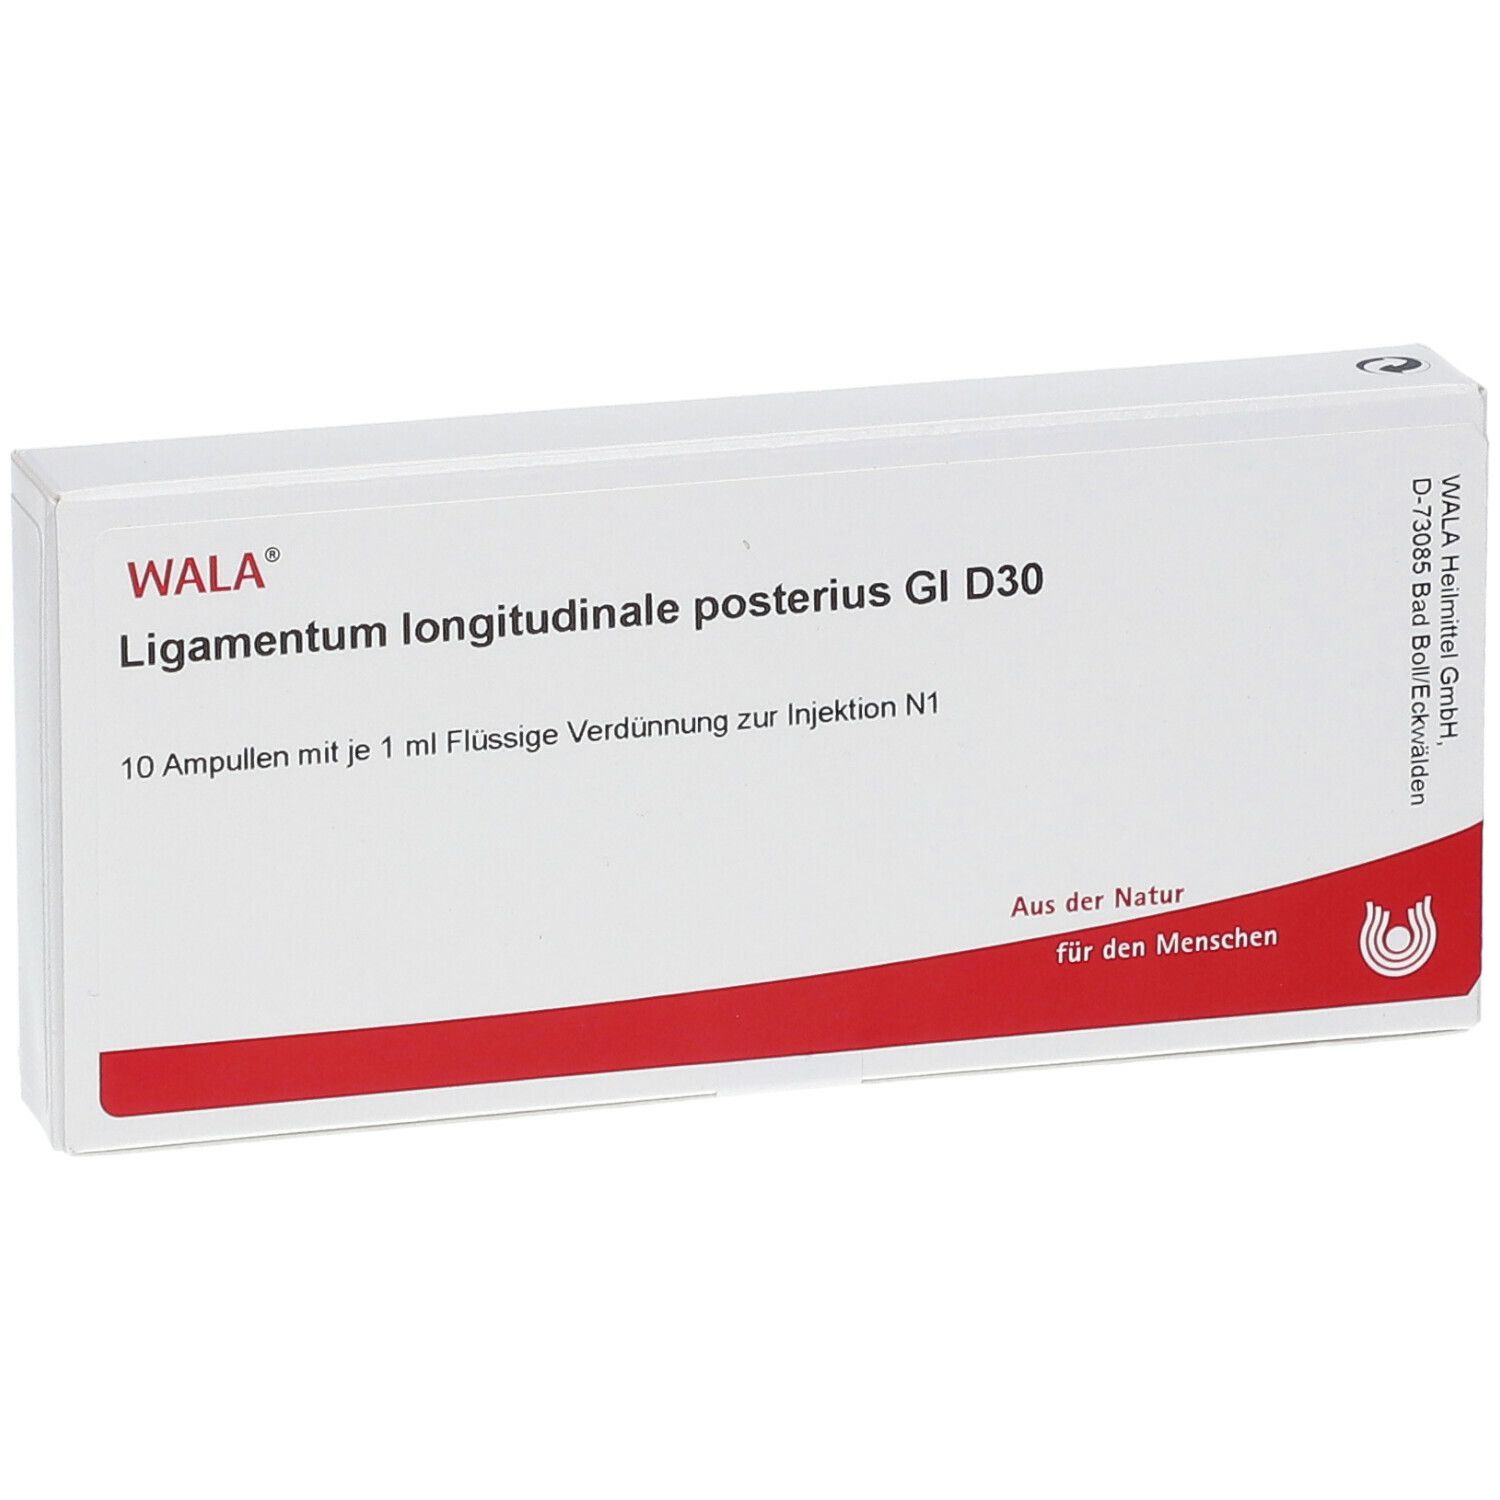 WALA® Ligamentum longitudinale posterius Gl D 30